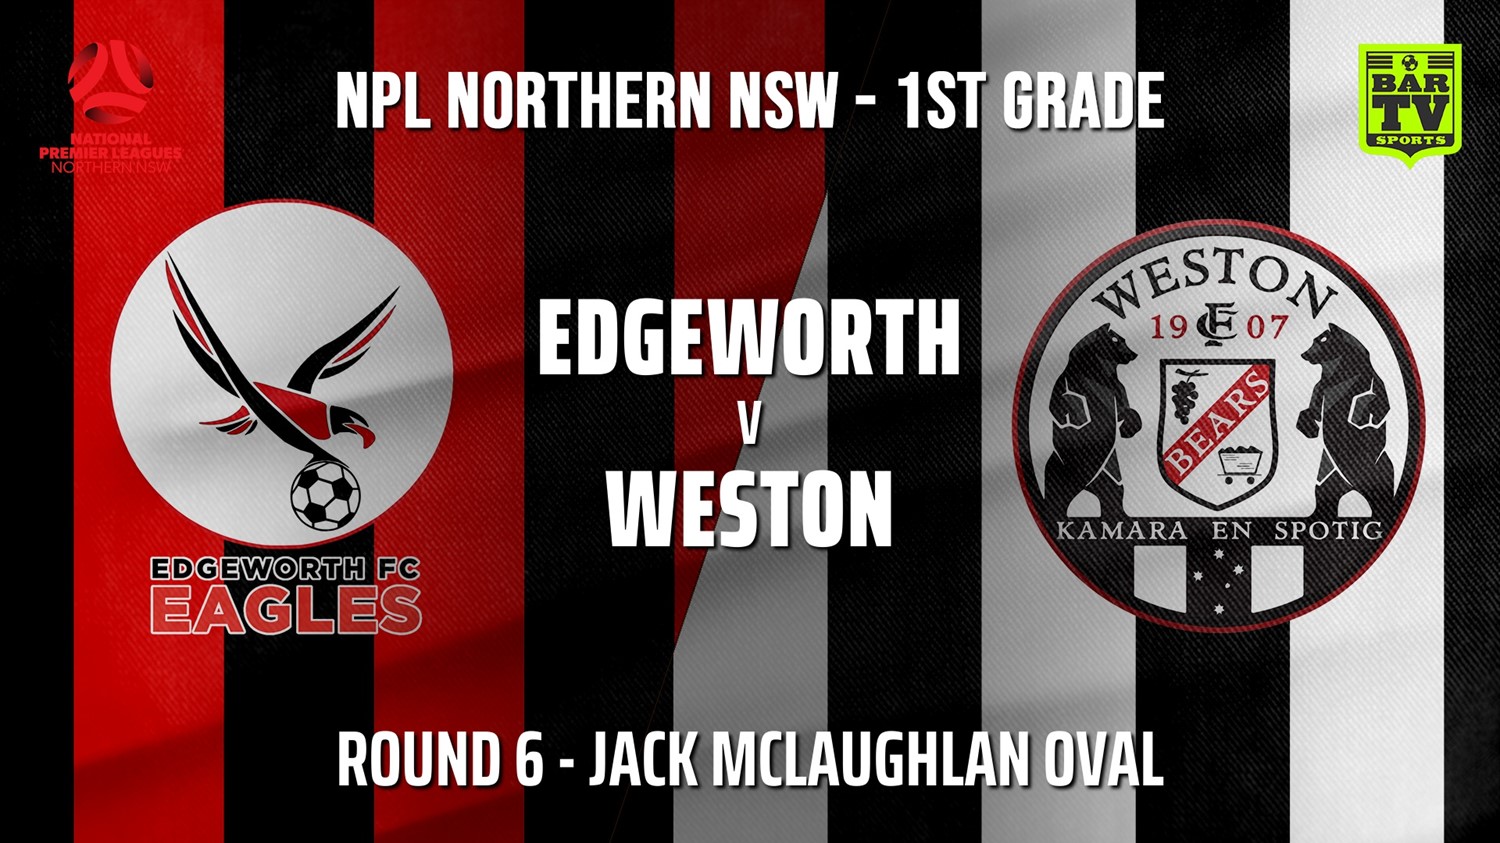 210509-NPL - NNSW Round 6 - Edgeworth Eagles FC v Weston Workers FC Minigame Slate Image